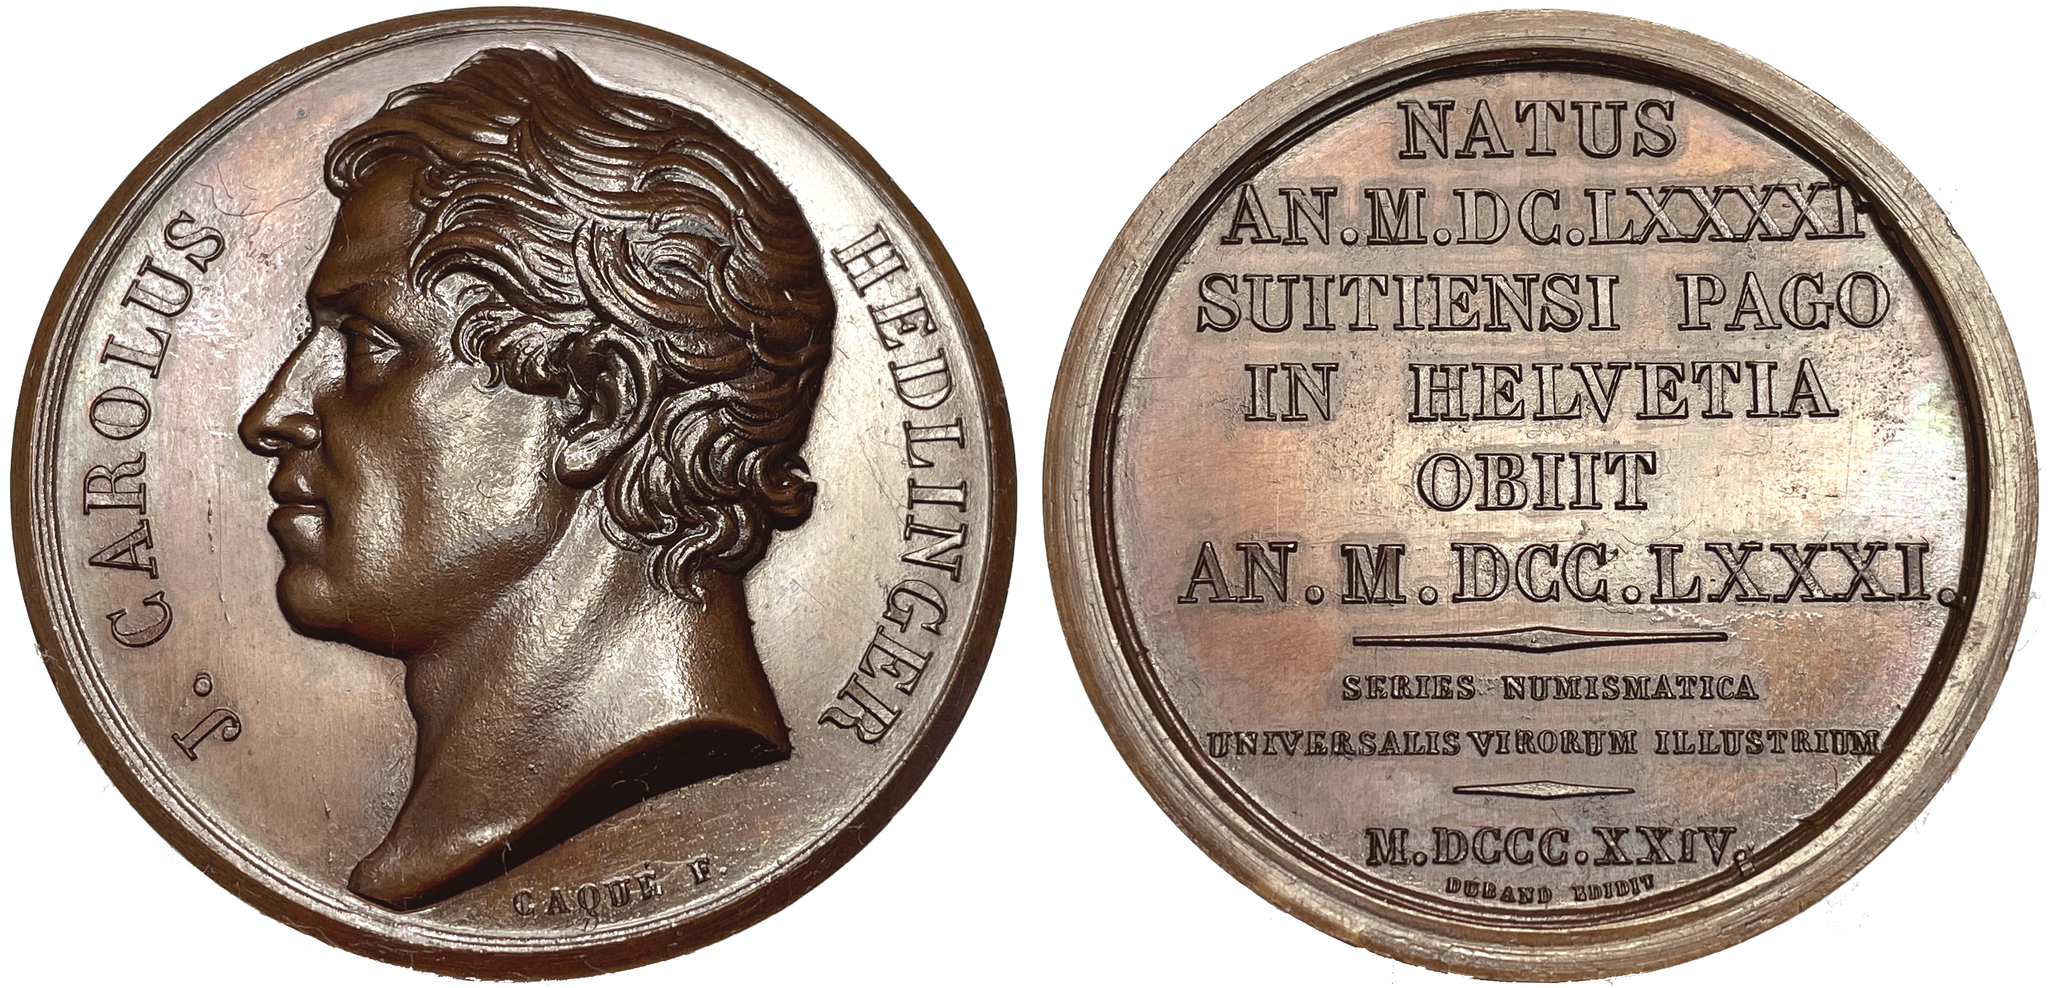 Johan Carl Hedlinger av Armand Chaqué 1824 - Vackert exemplar